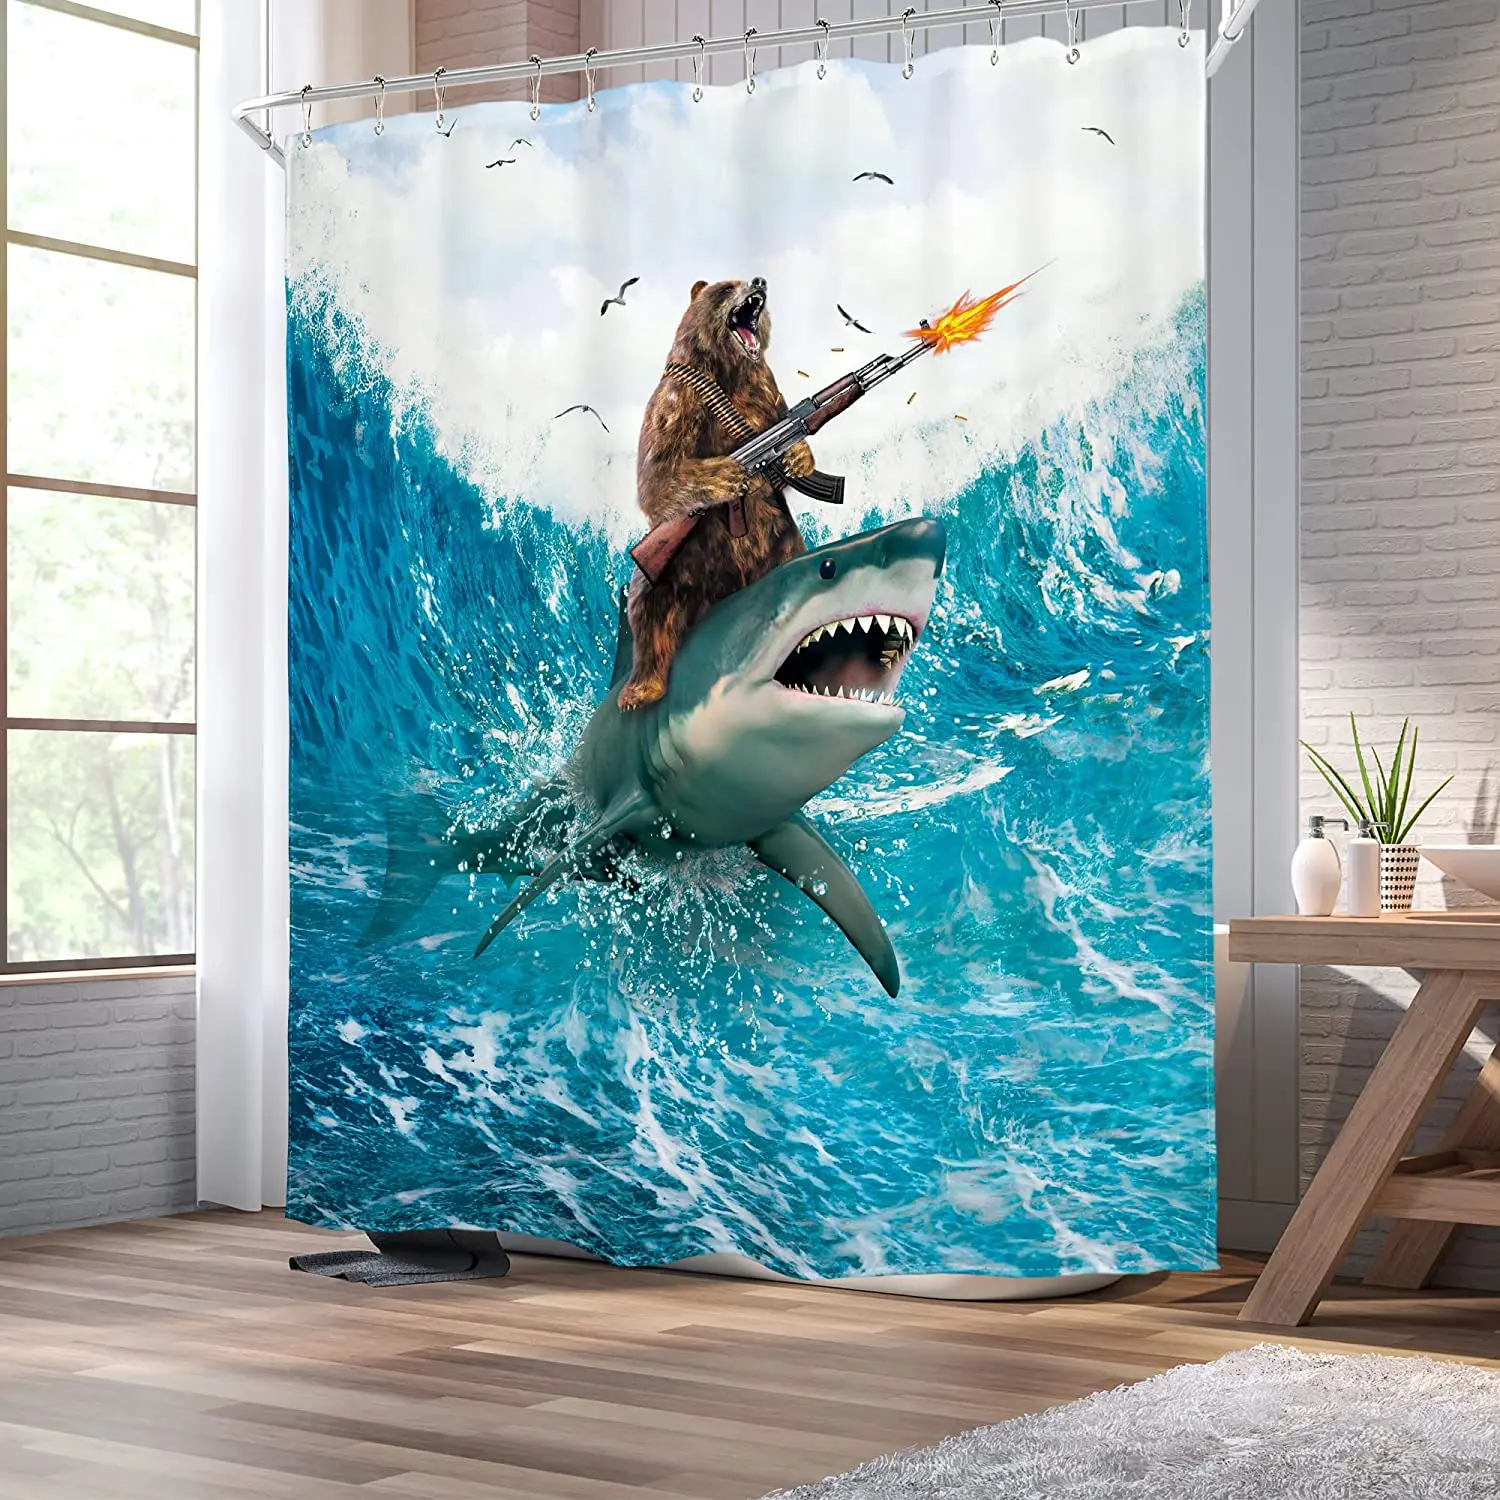 

Funny Bear Shark Shower Curtains Riding Surfing Cool Animal Blue Sea Waves Ocean Birds Polyester Fabric Bathroom Curtain Decor